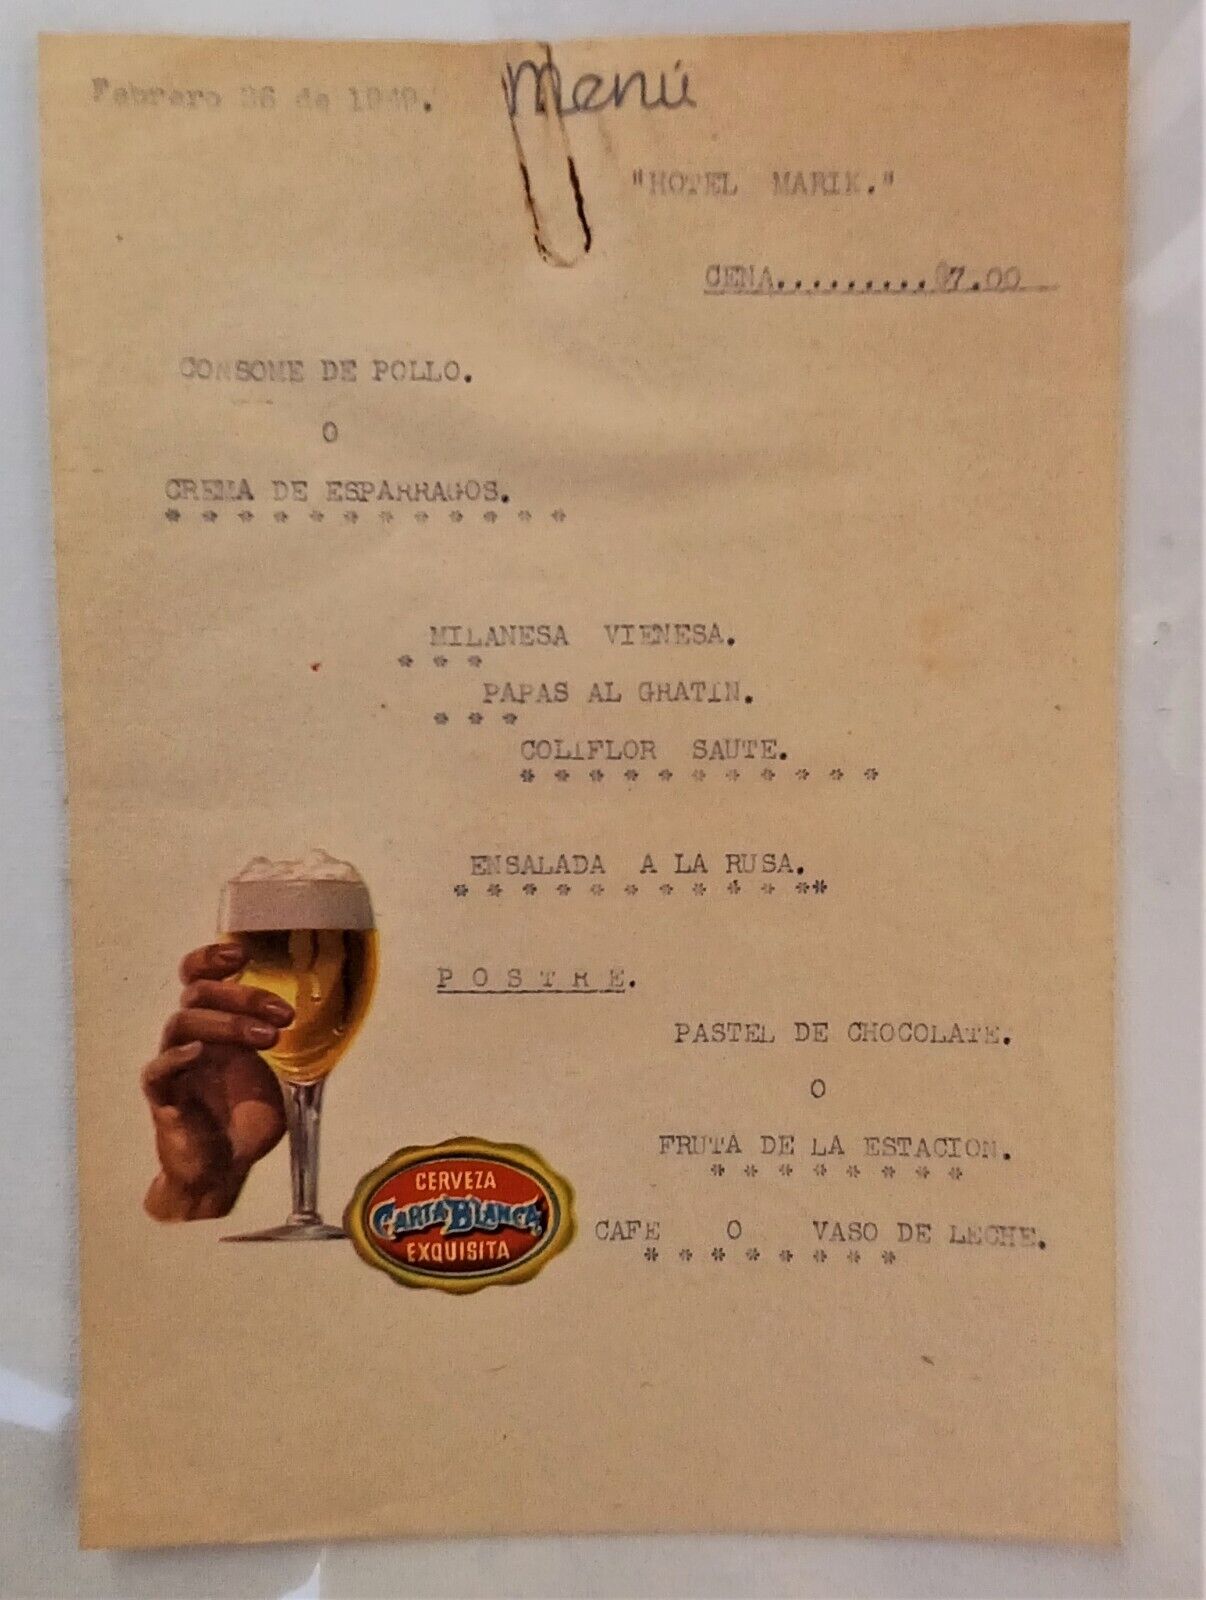 Vintage Restaurant Menu Hotel Marik Mexico 1949 Cerveza Carta Blanca Exquisita